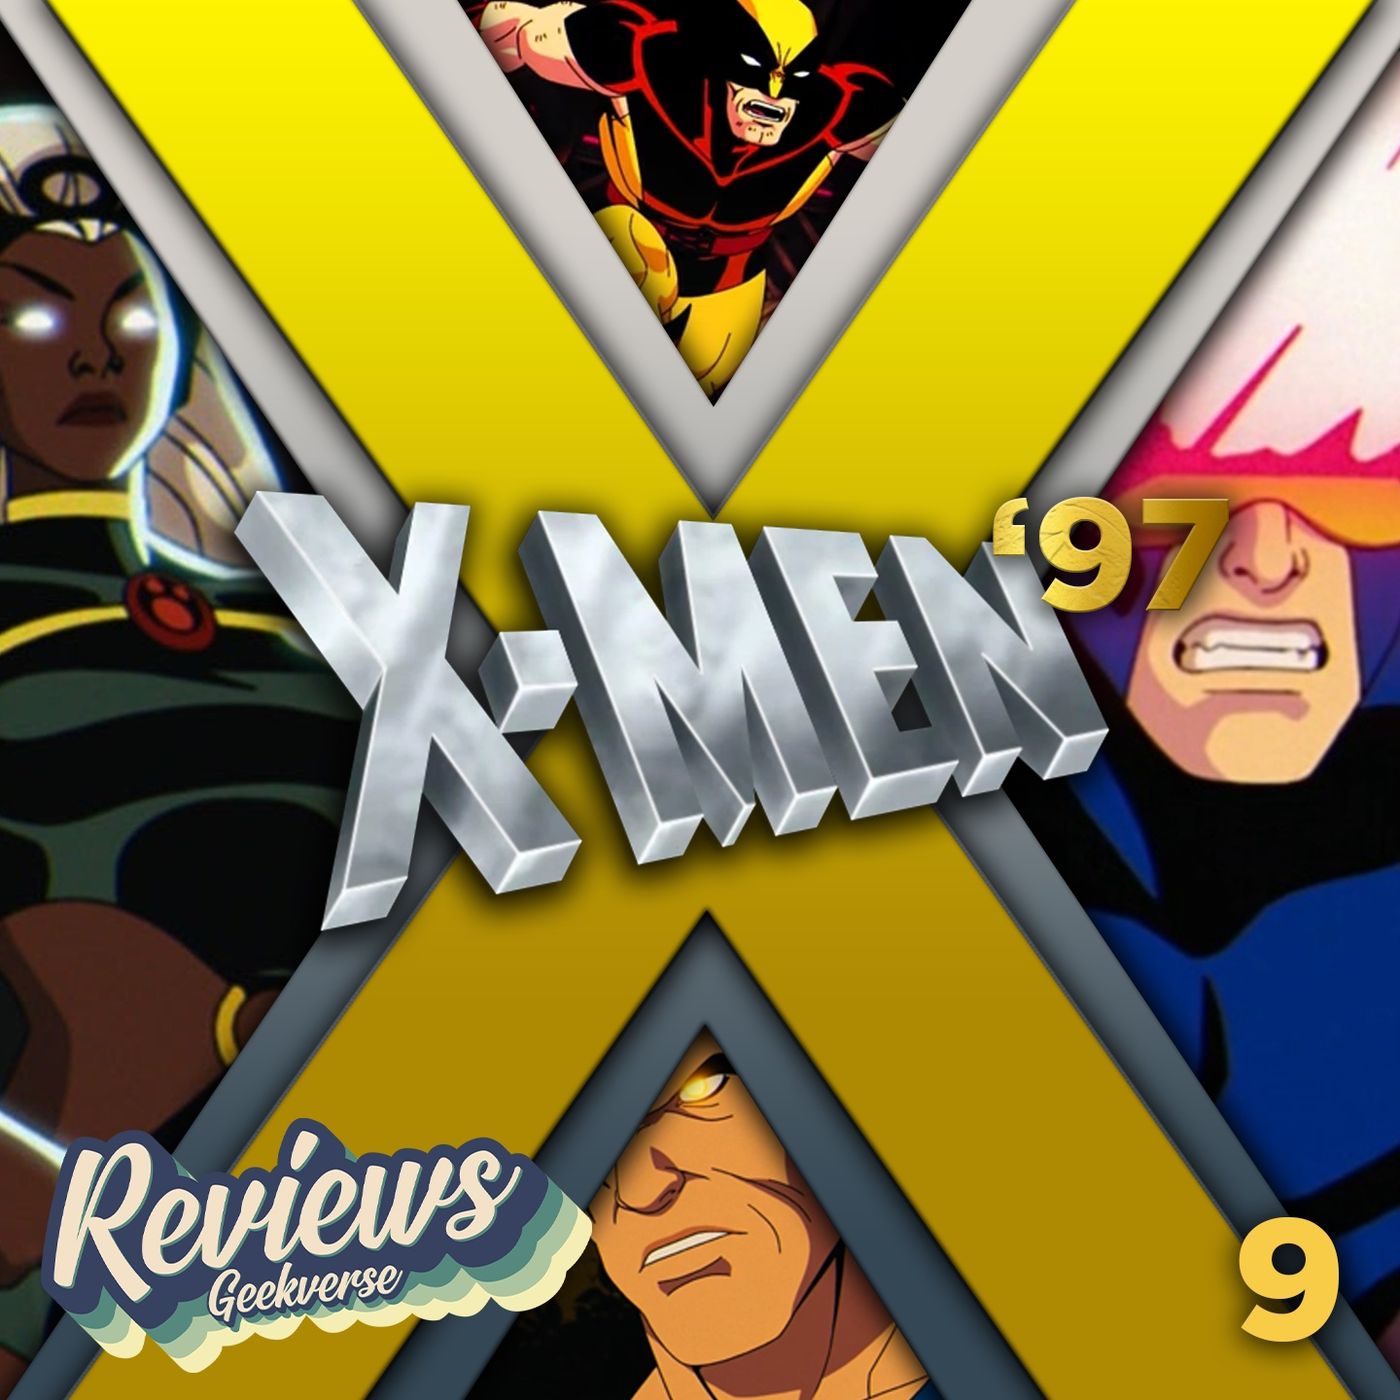 X-Men 97 Episode 9 Spoilers Review